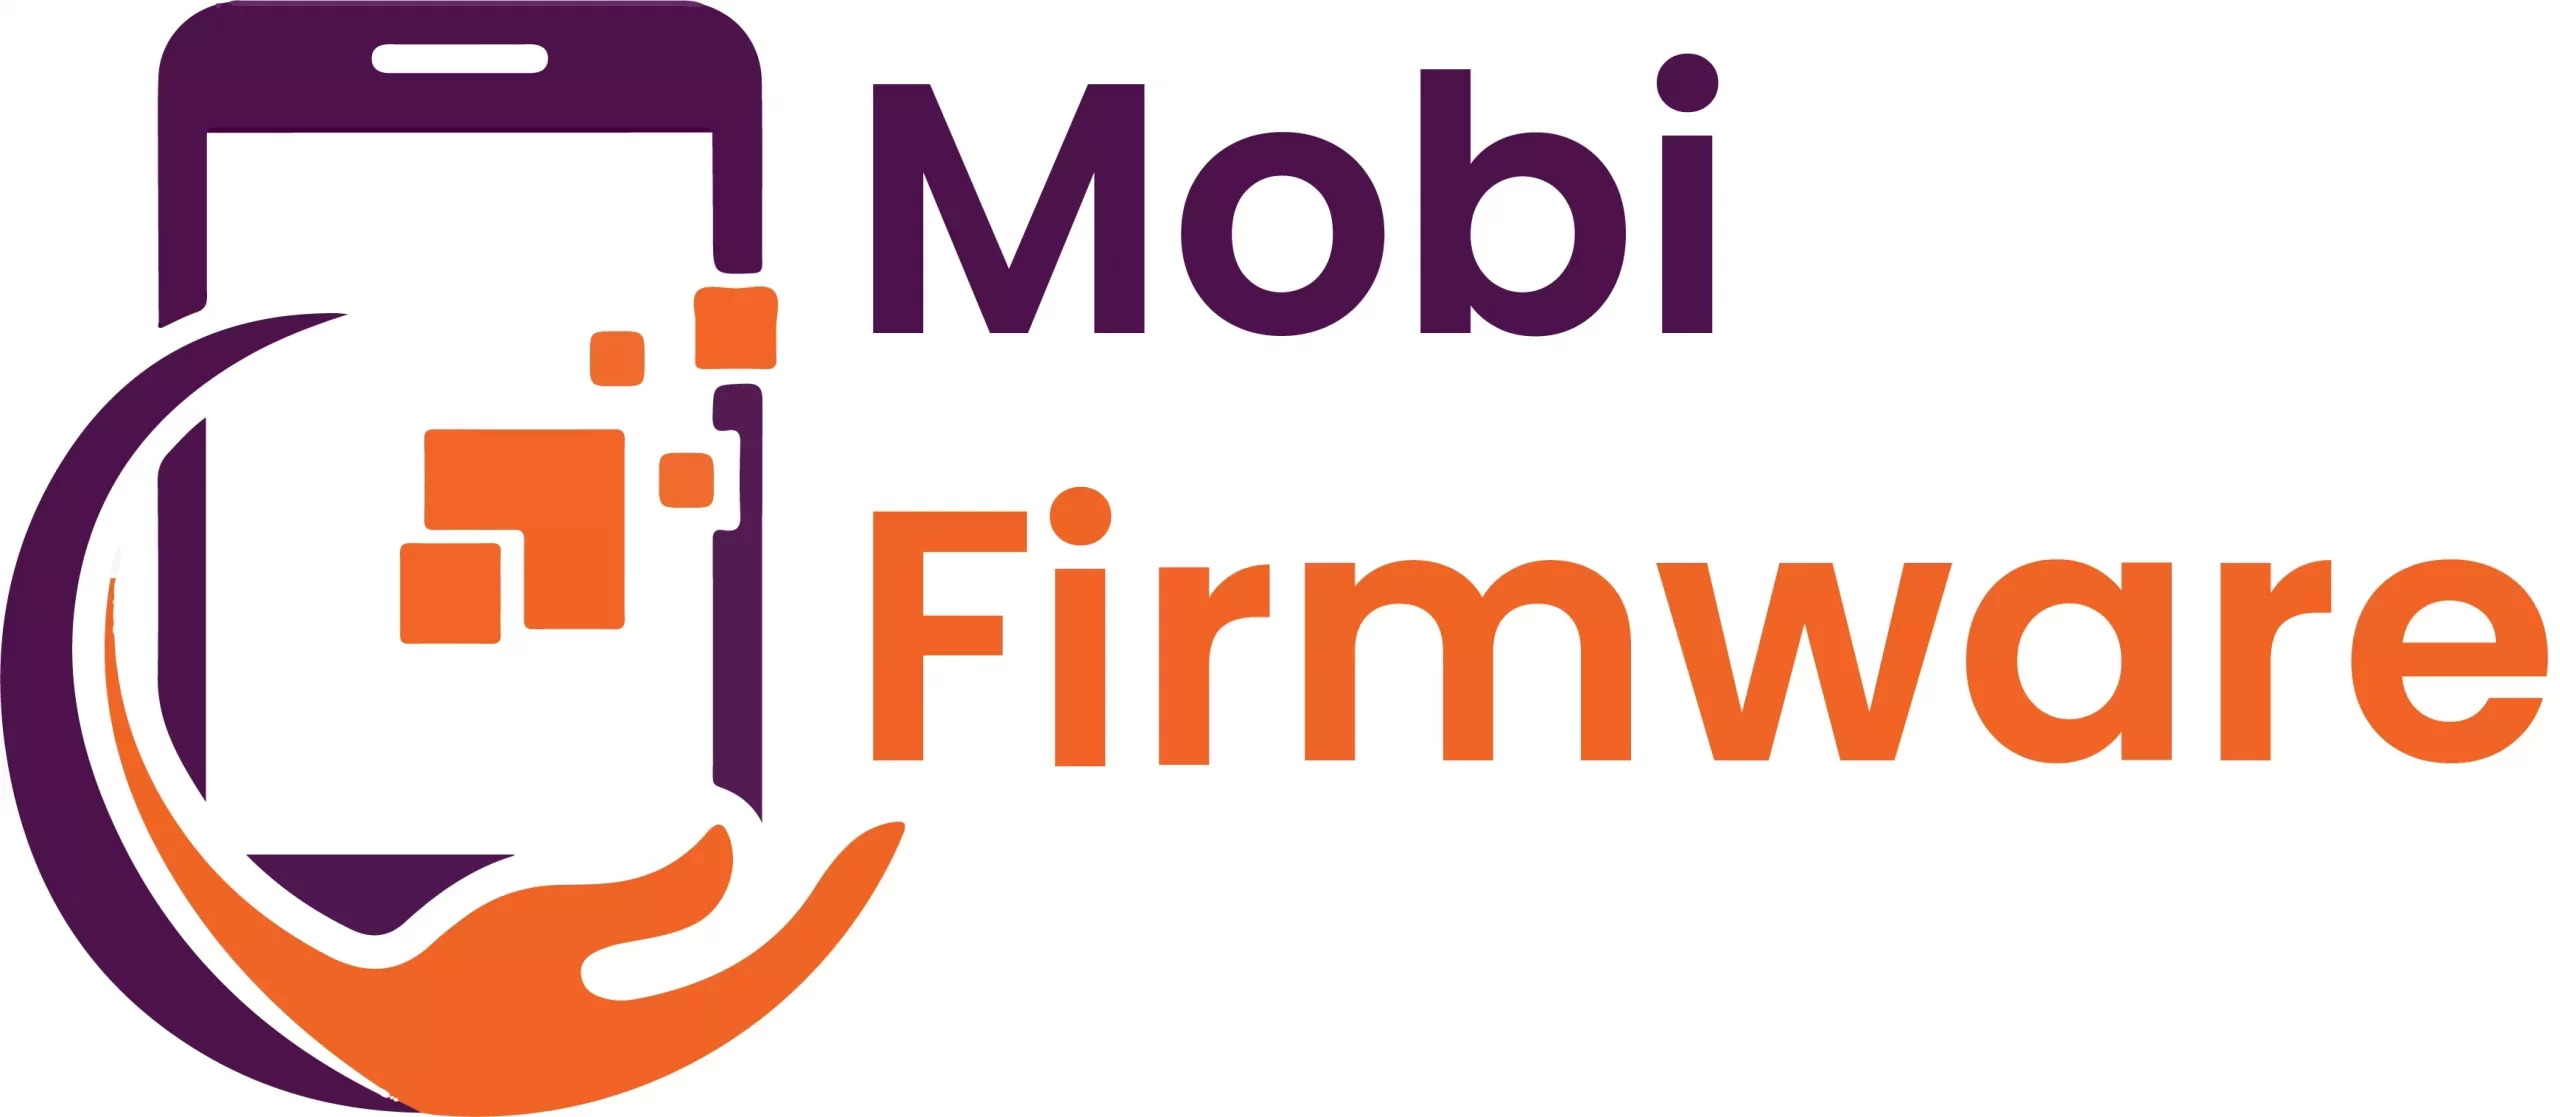 mobi firmware